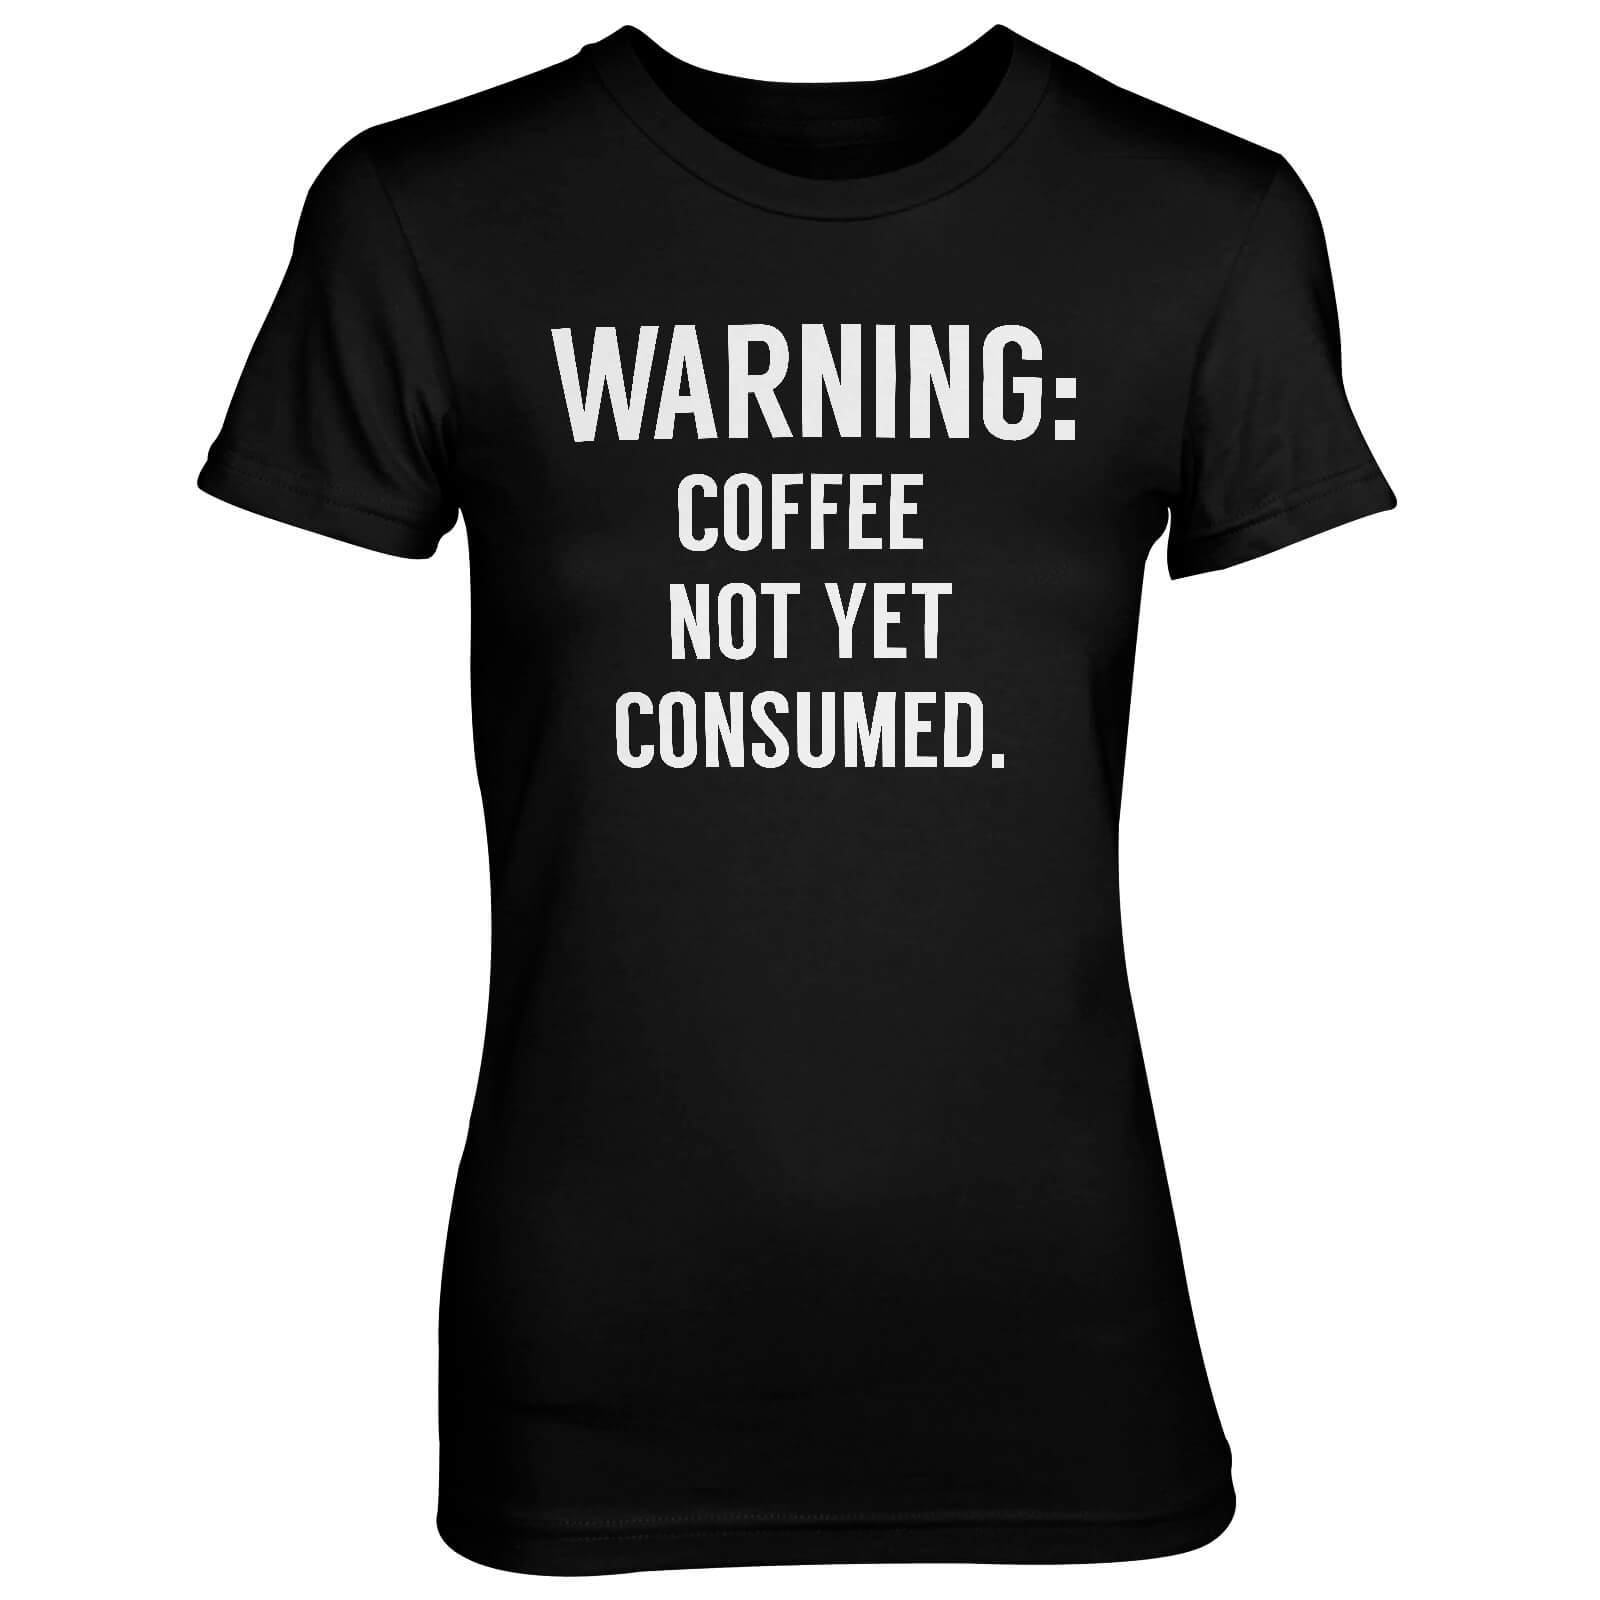 Warning: Coffee Not Yet Consumed Women's Black T-Shirt - S - Black